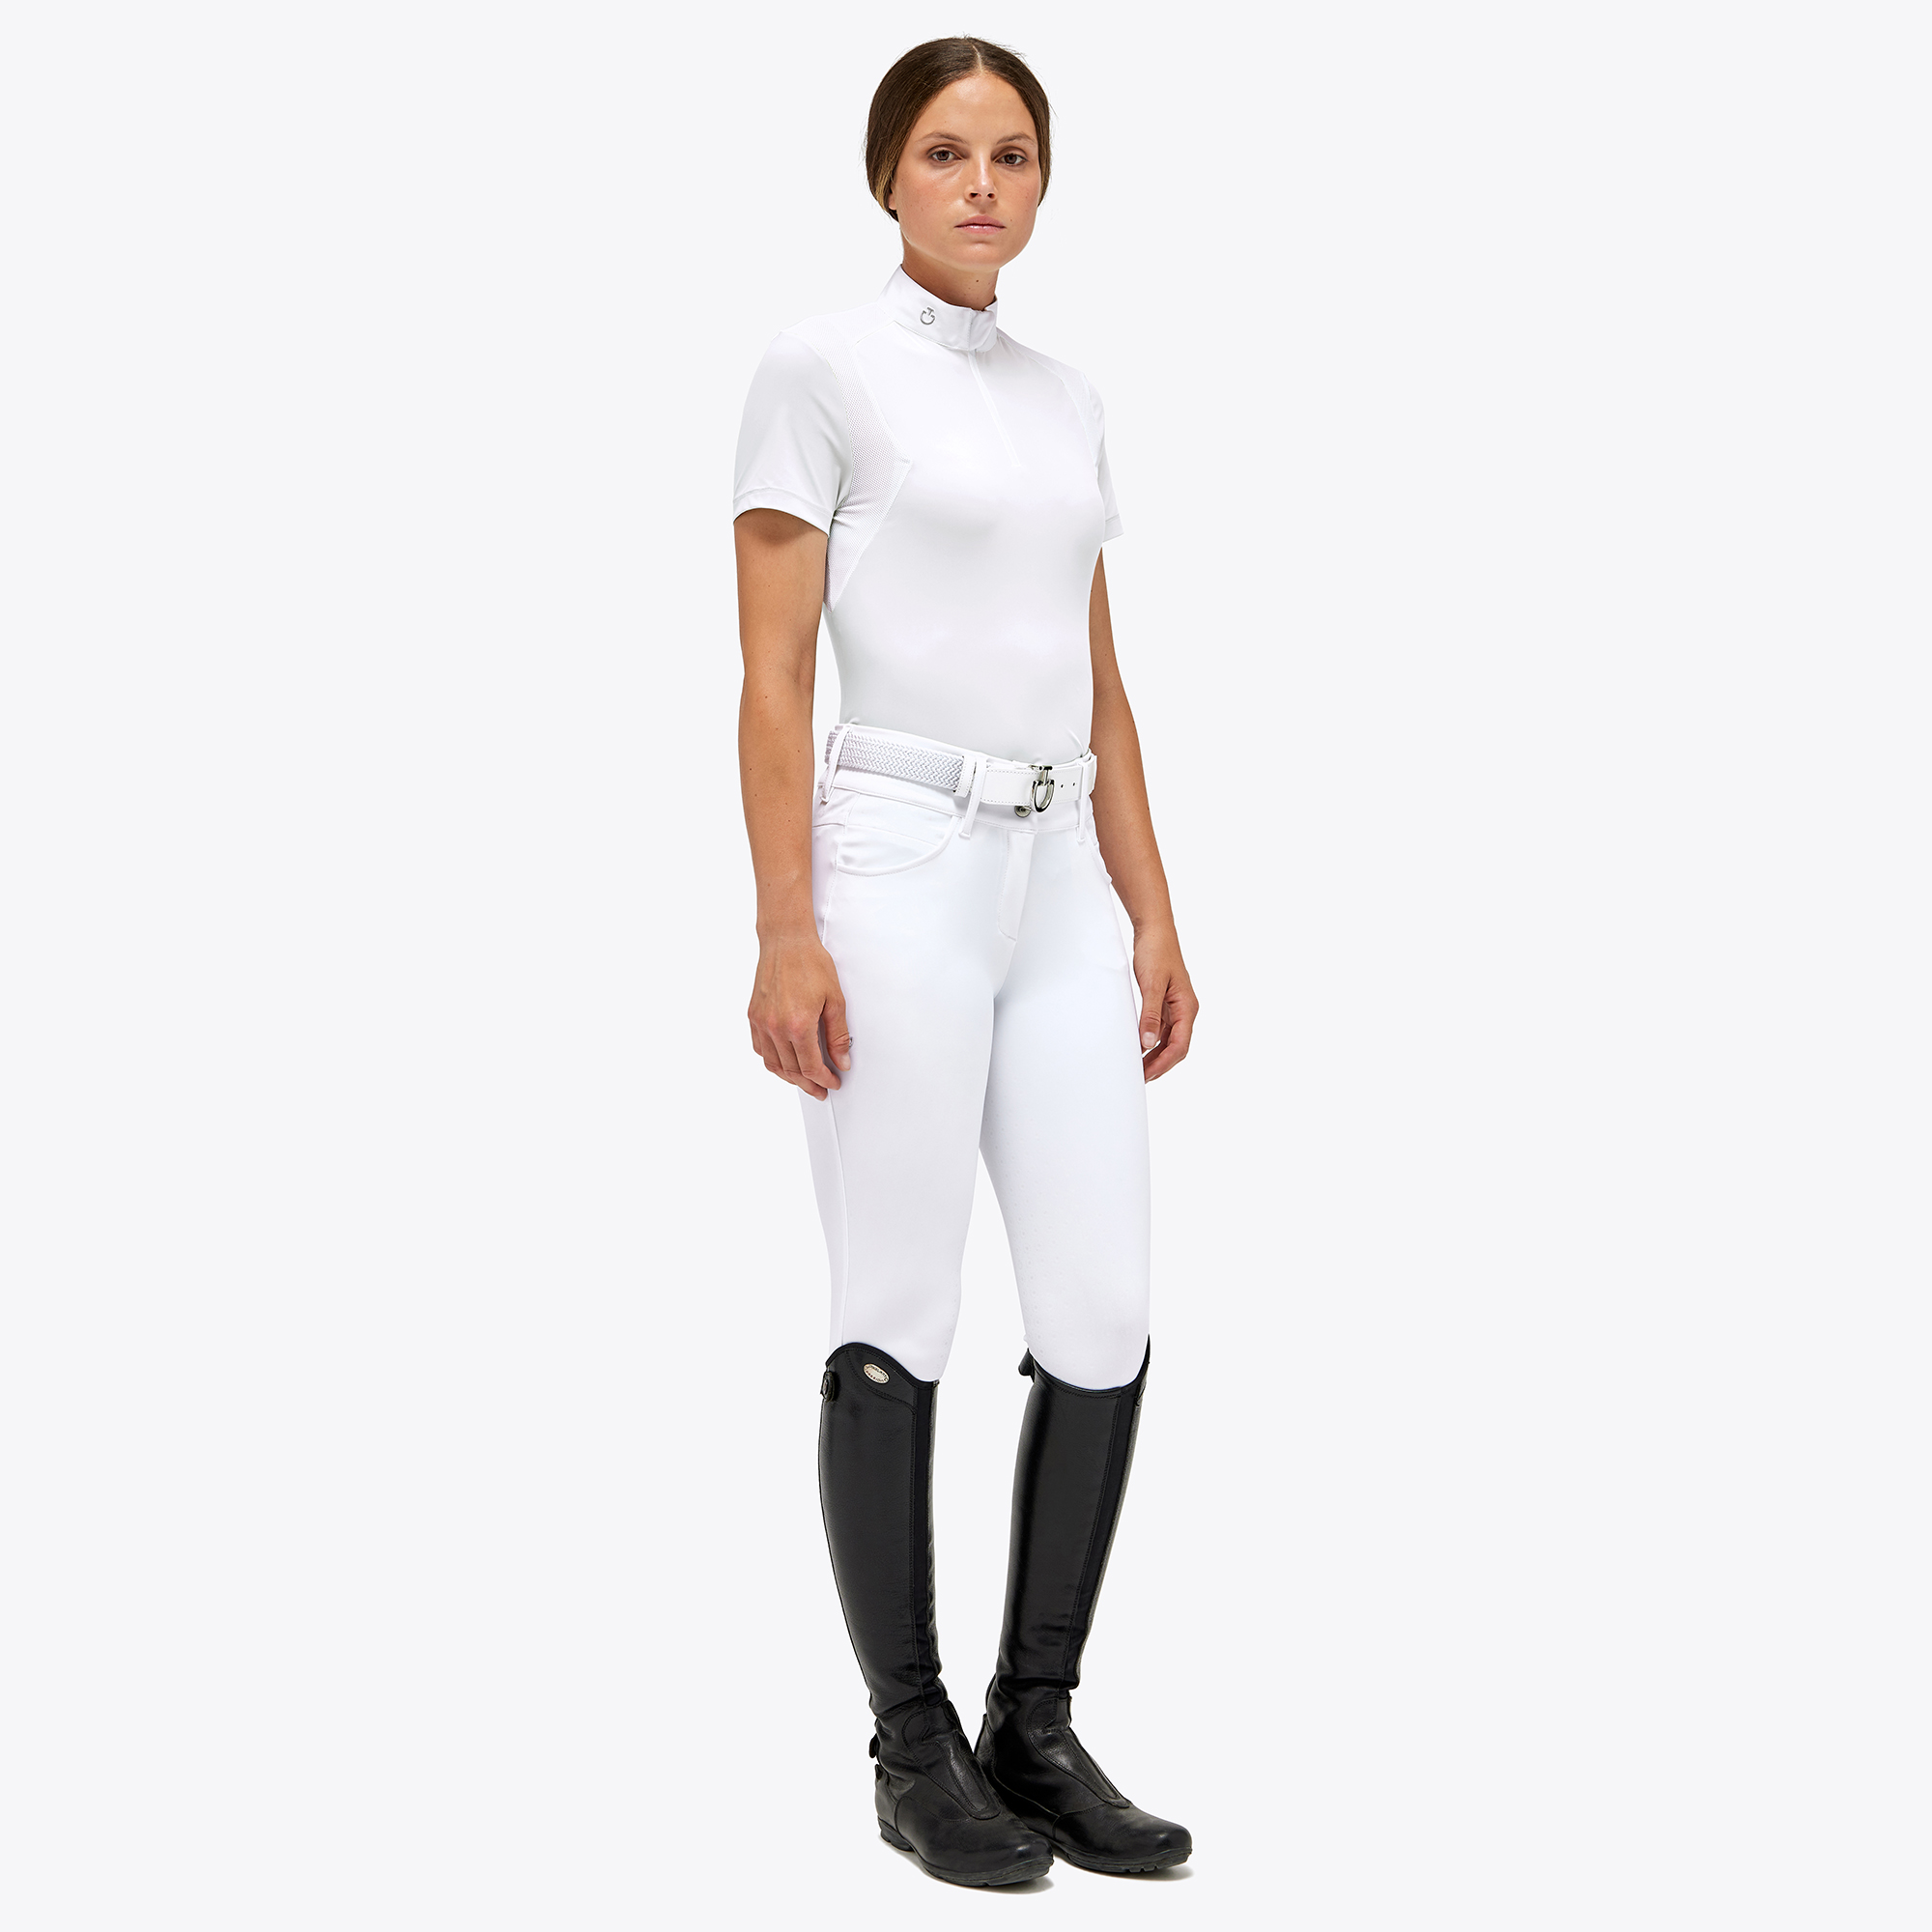 CAVALLERIA TOSCANA elegantes Damen Kurzarm Turniershirt Jersey Mesh - white/knit - L - 1